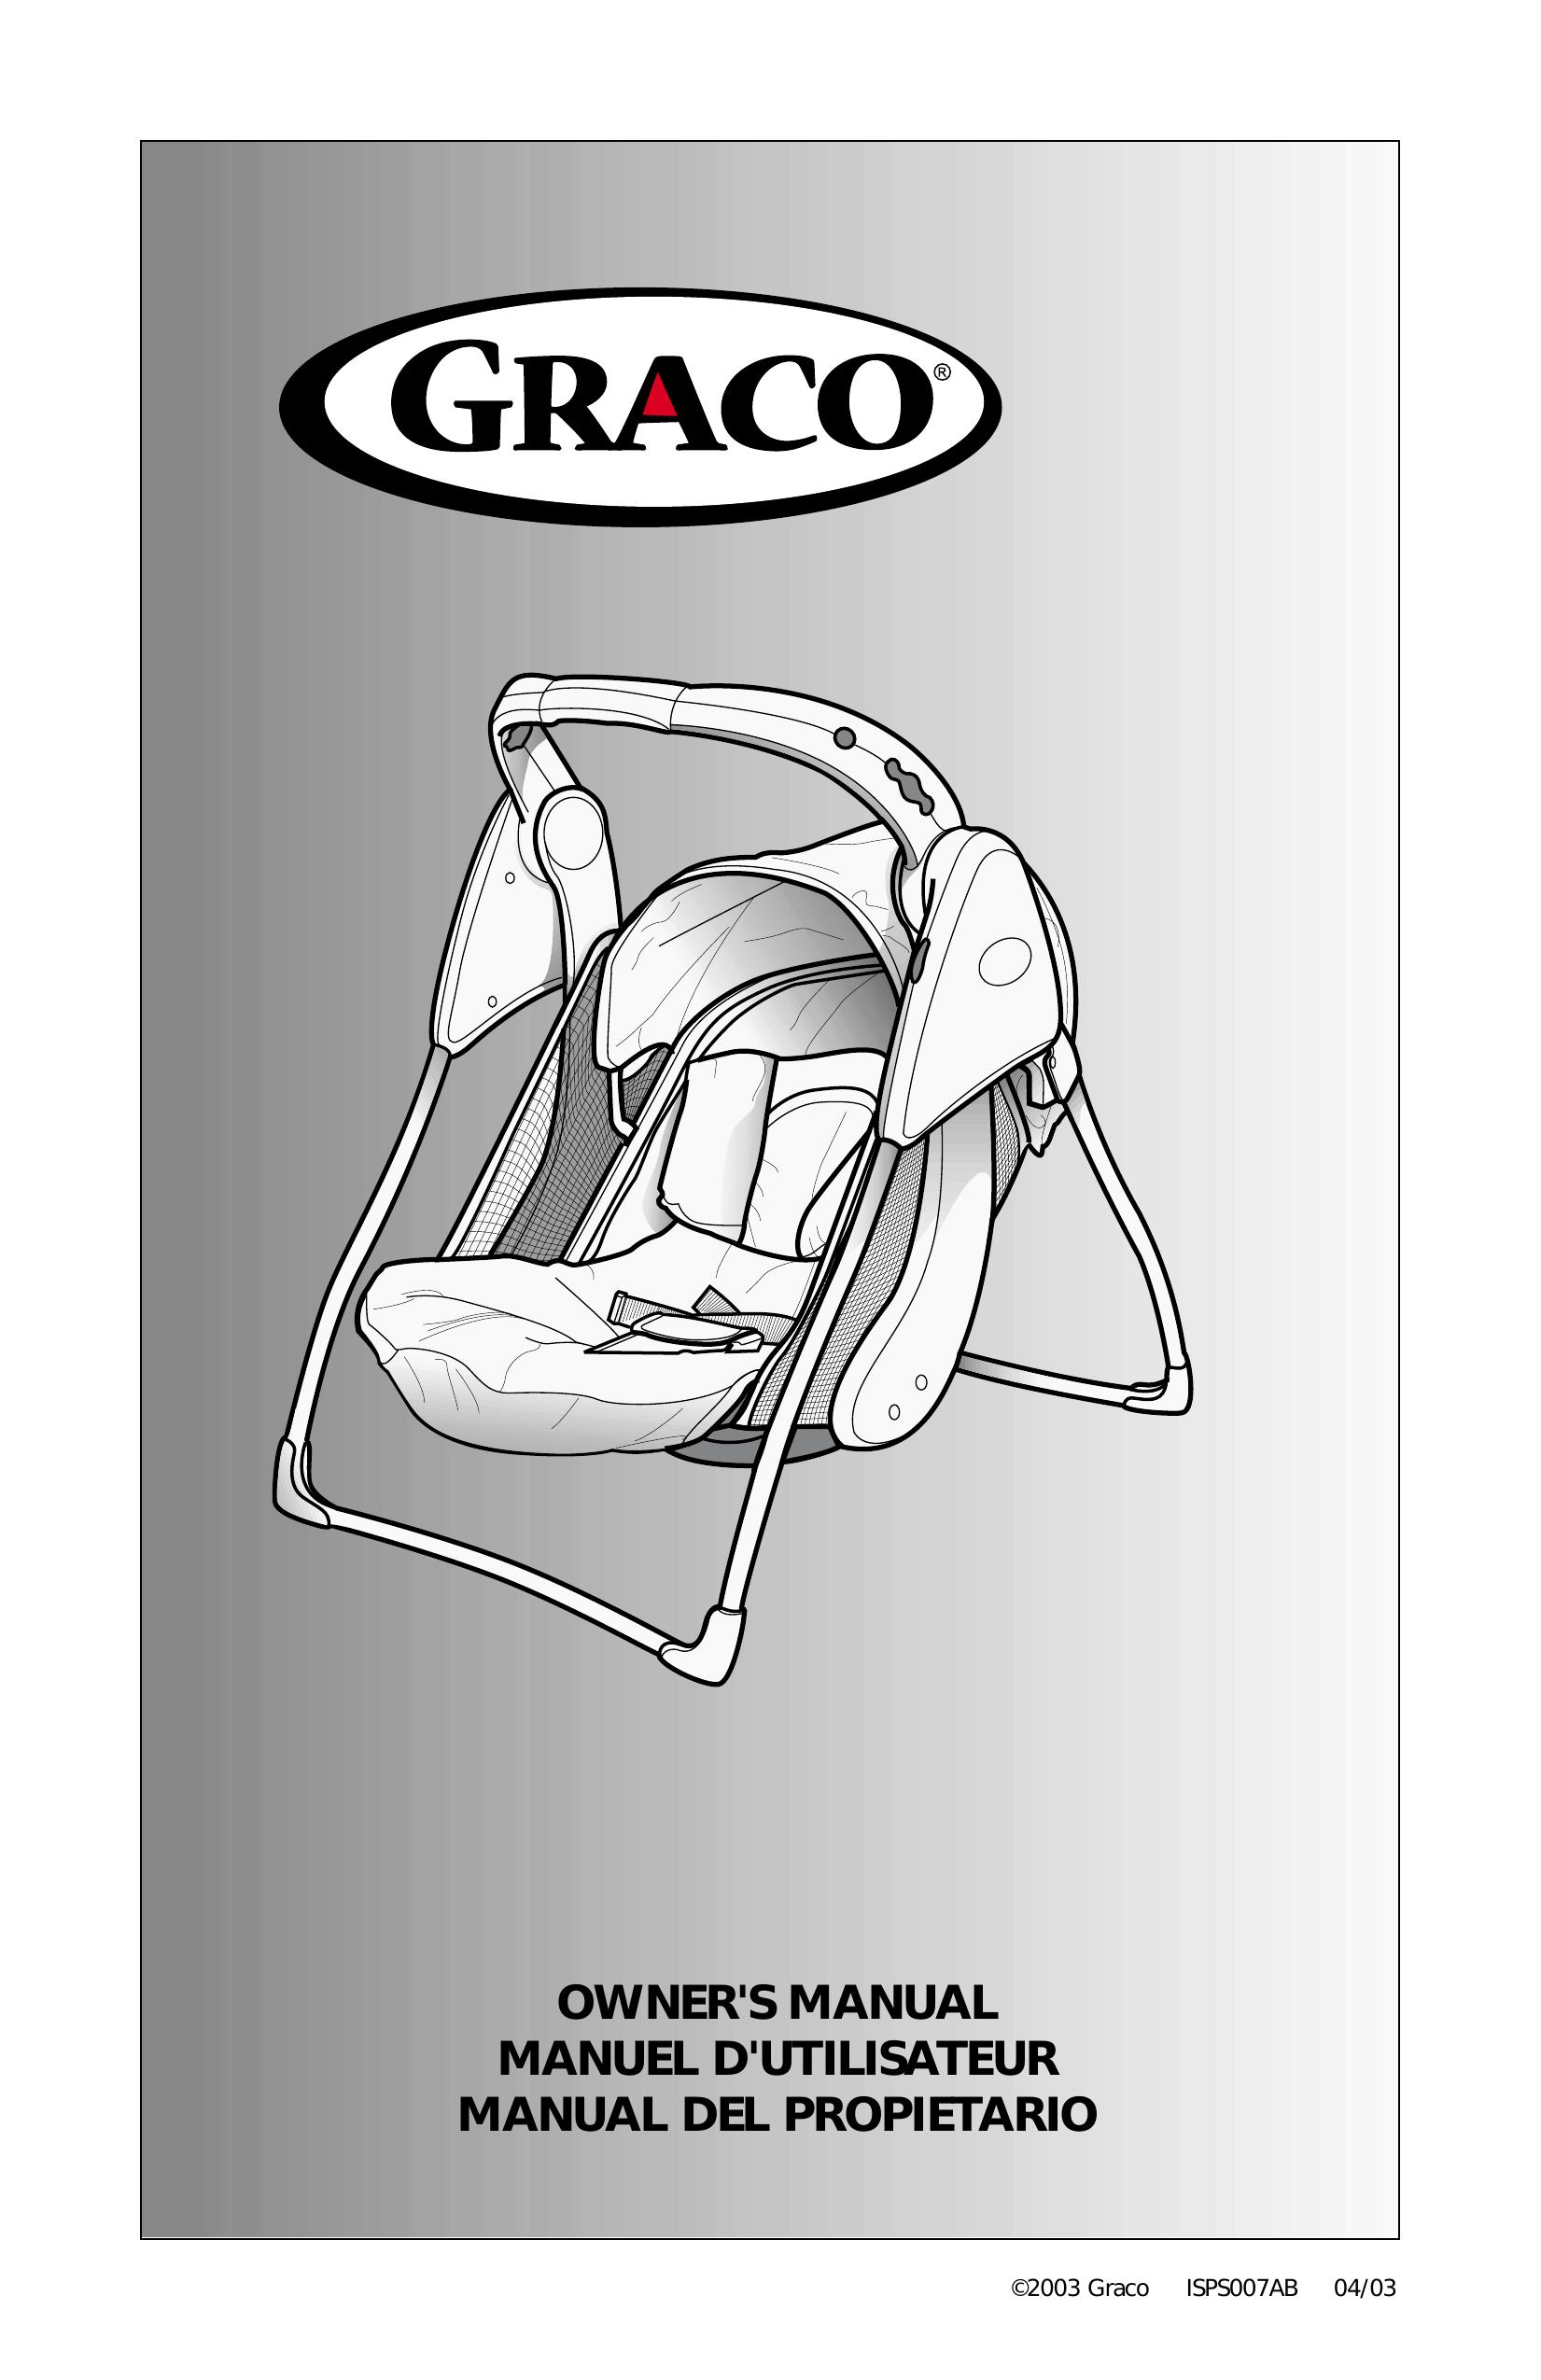 Graco Type 1850 Swing Sets User Manual